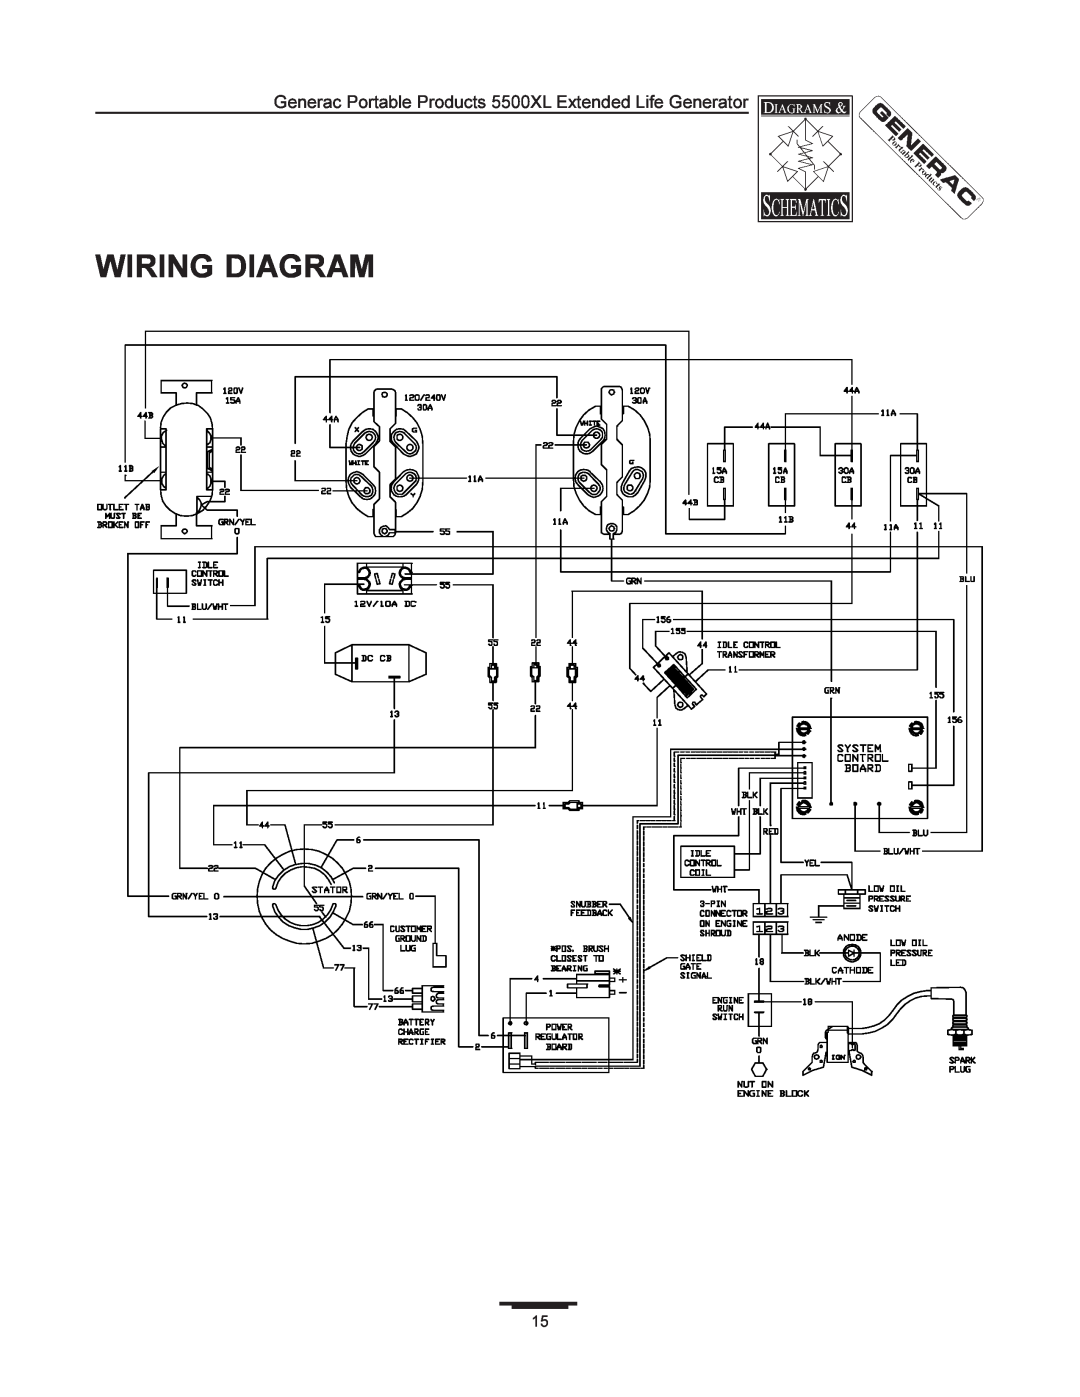 Generac manual Wiring Diagram, Generac Portable Products 5500XL Extended Life Generator 